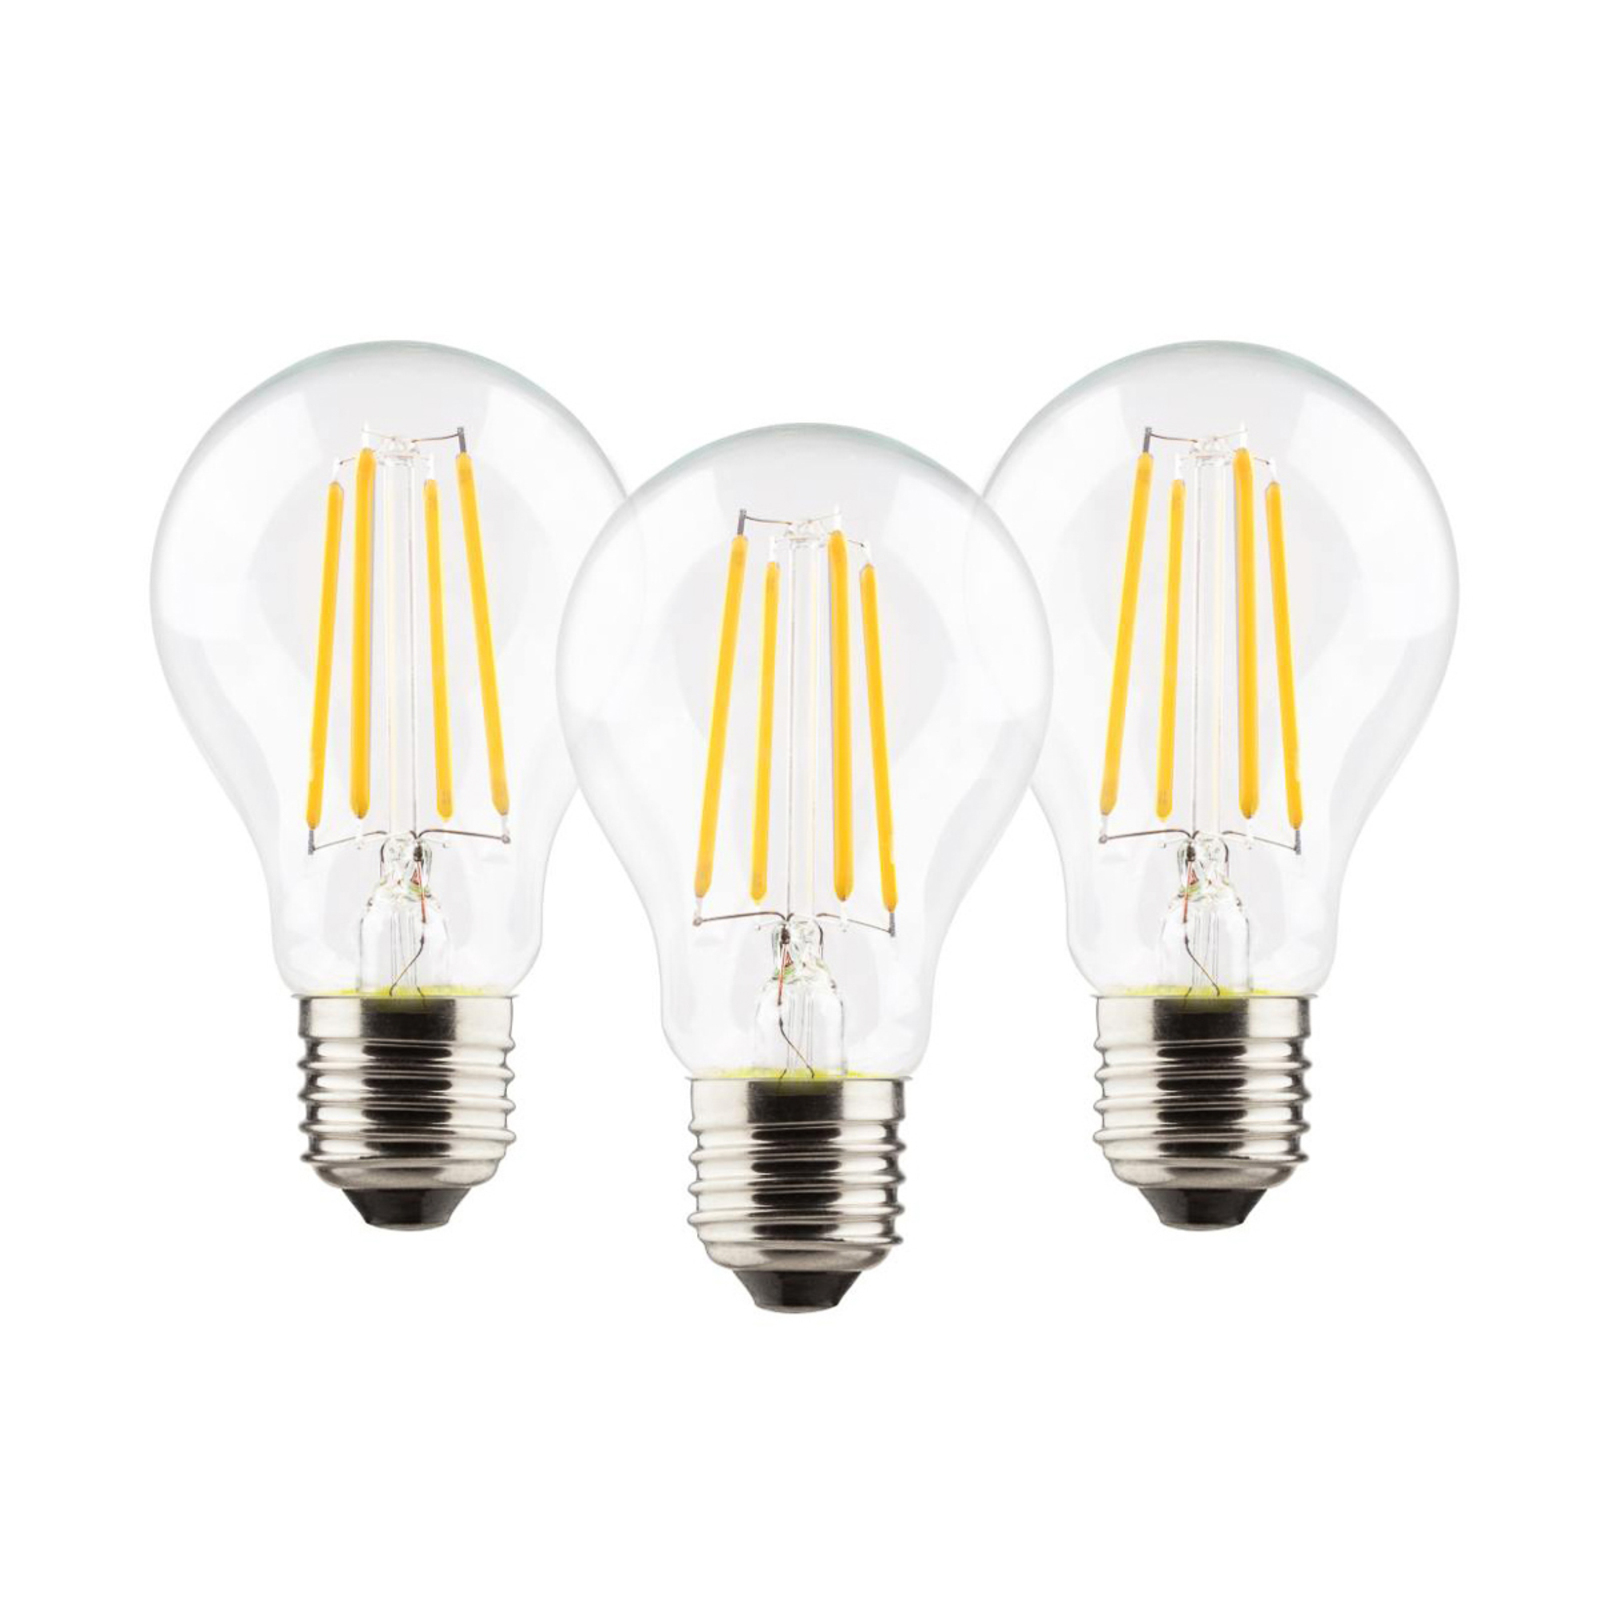 Müller Licht LED žárovka E27 7W 827 filament 3ks